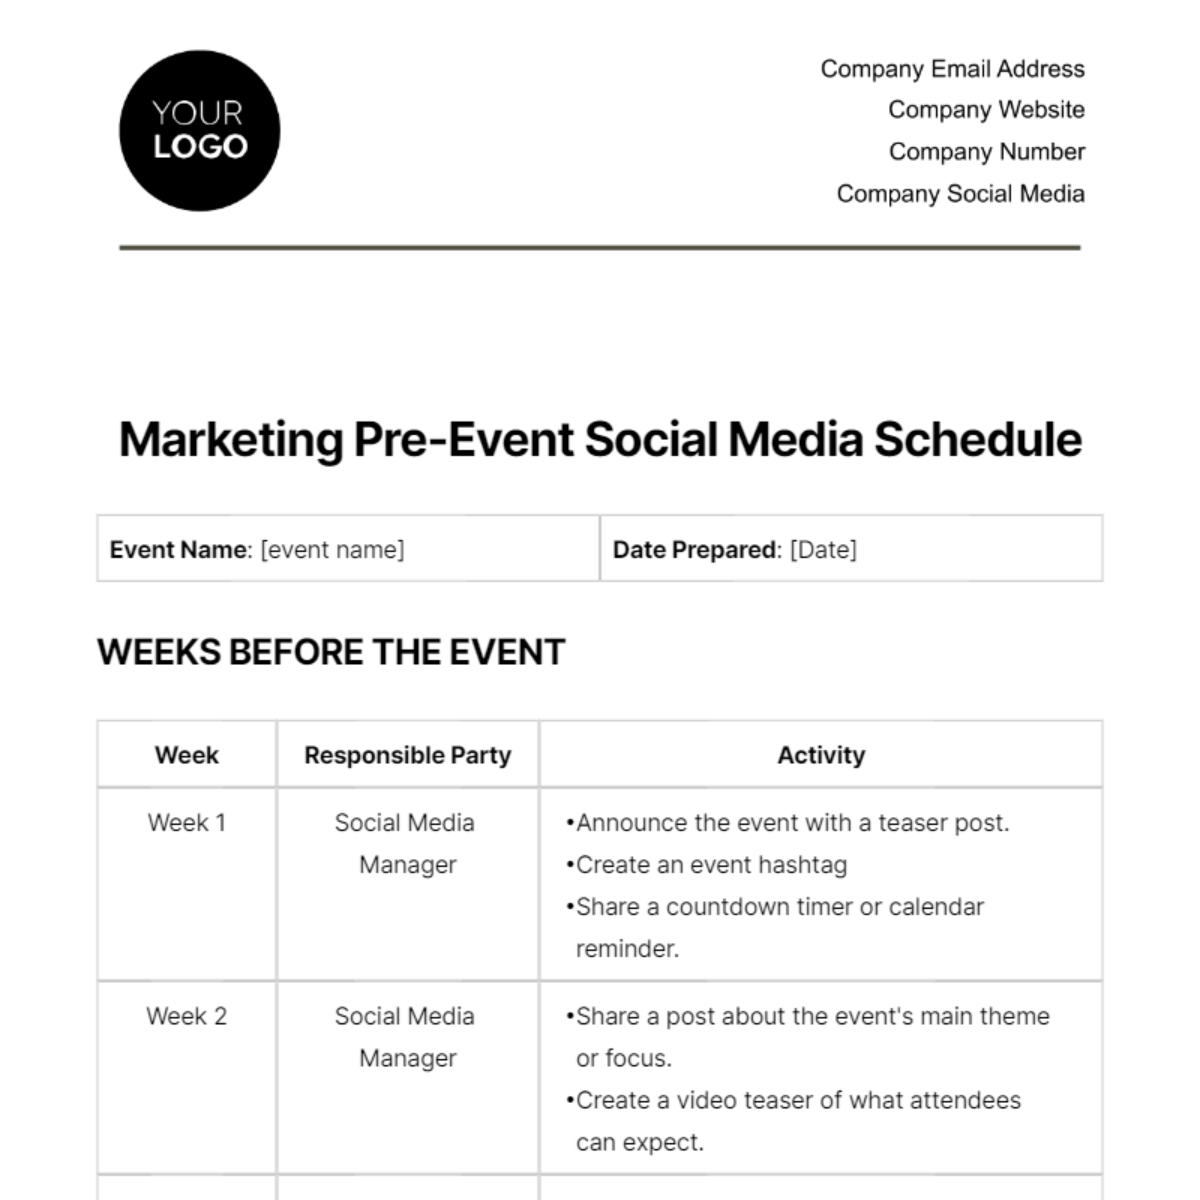 Marketing Pre-Event Social Media Schedule Template